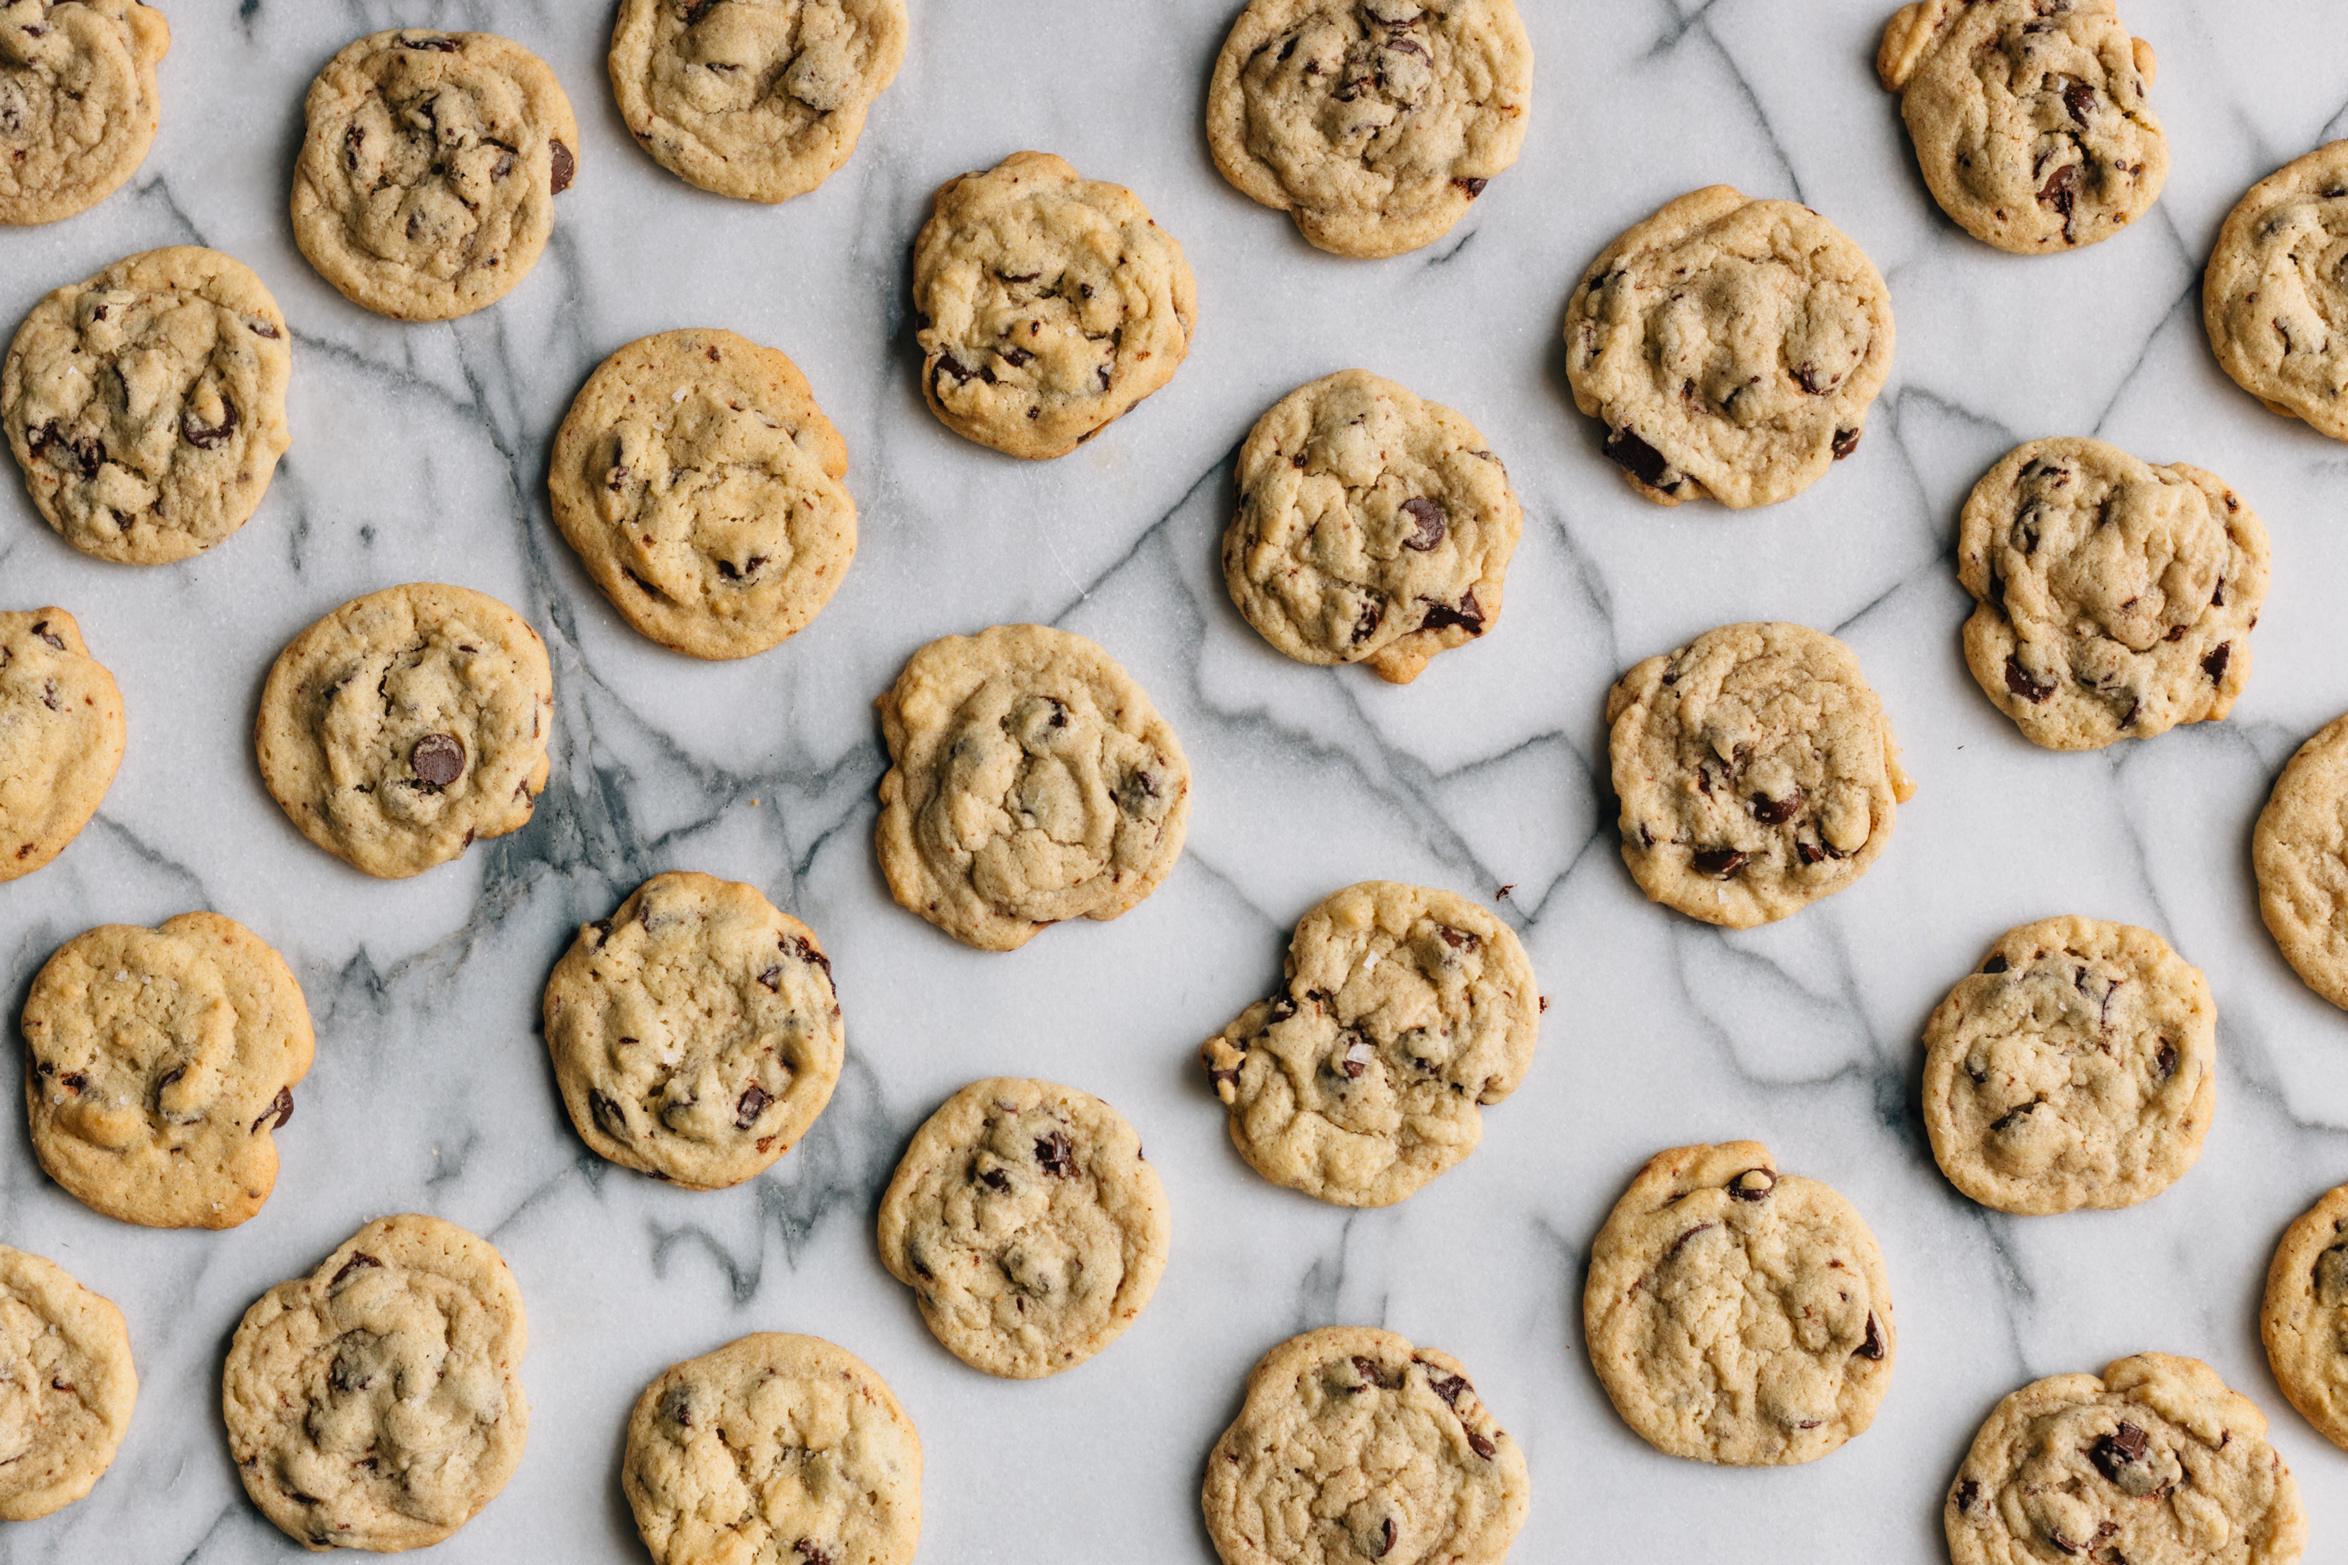 Why we like cookies?